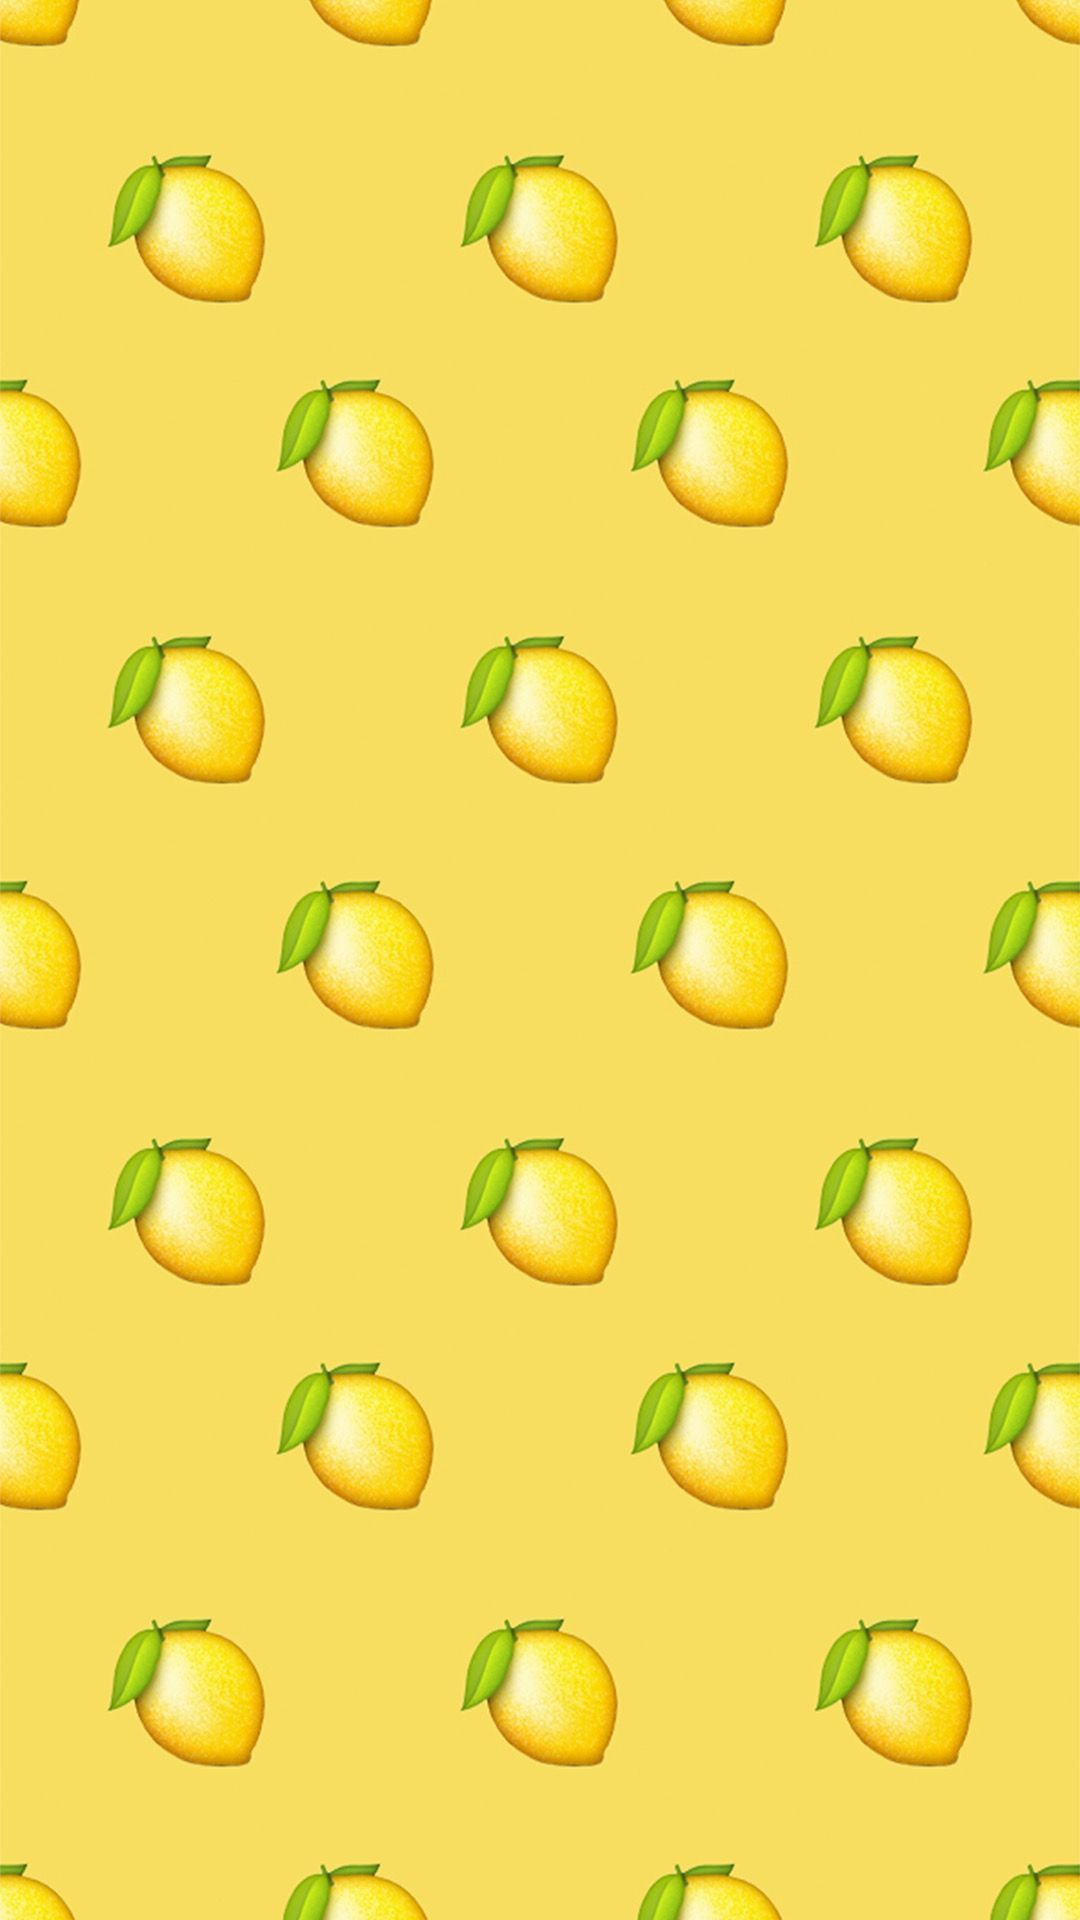 astheticwallpaperiphonepastel. Emoji wallpaper, Emoji wallpaper iphone, Yellow wallpaper